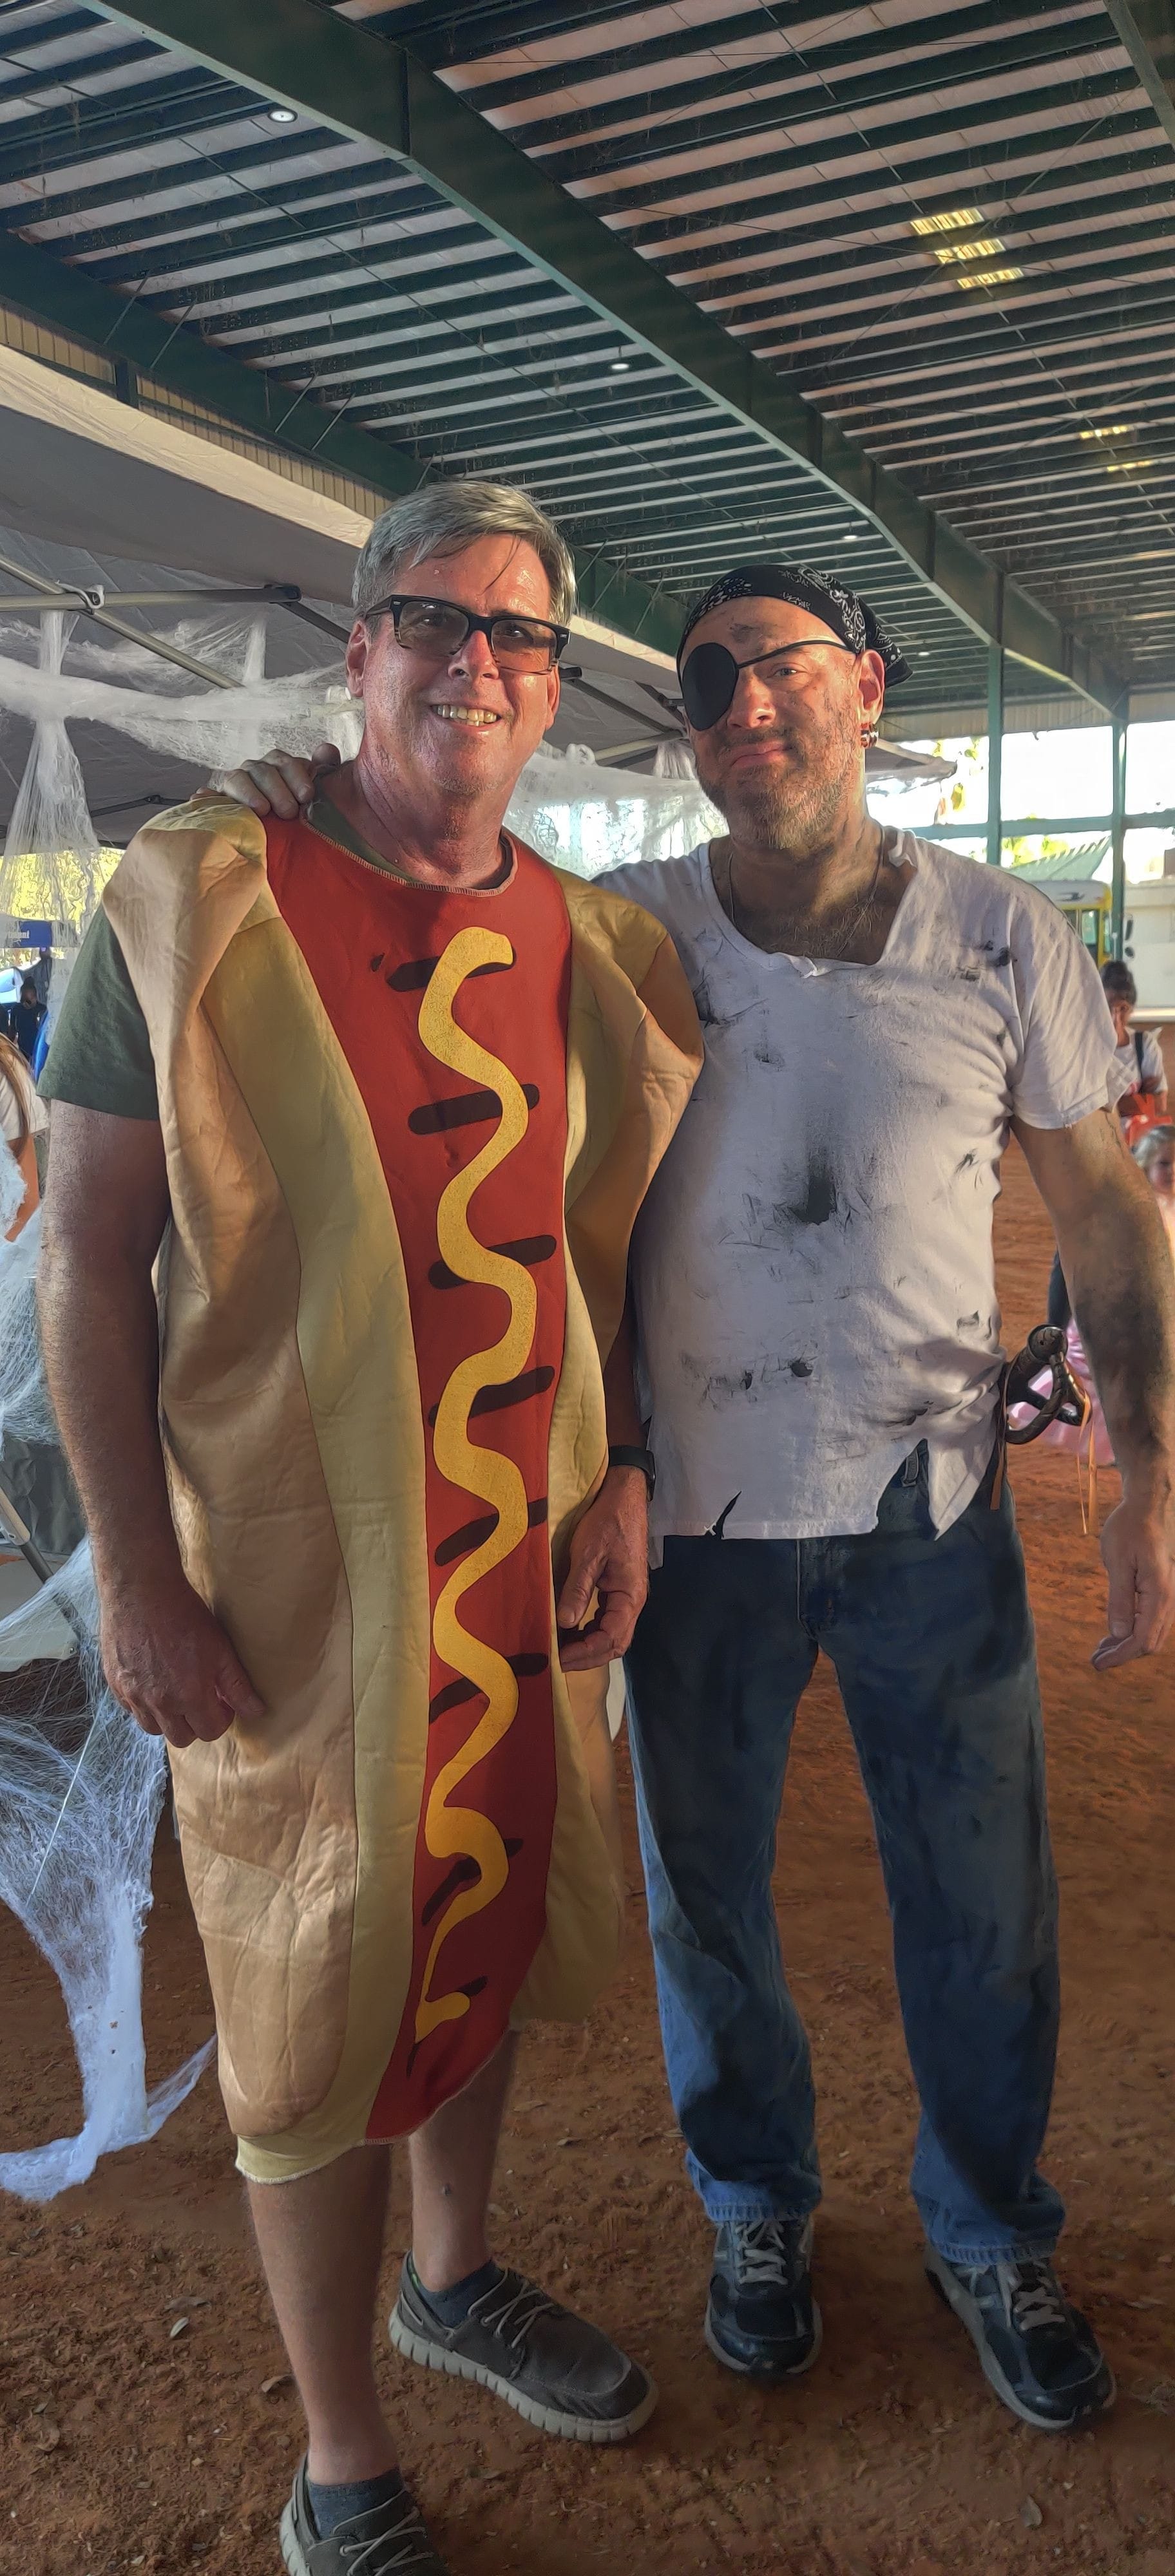 Man In Hot Dog Costume